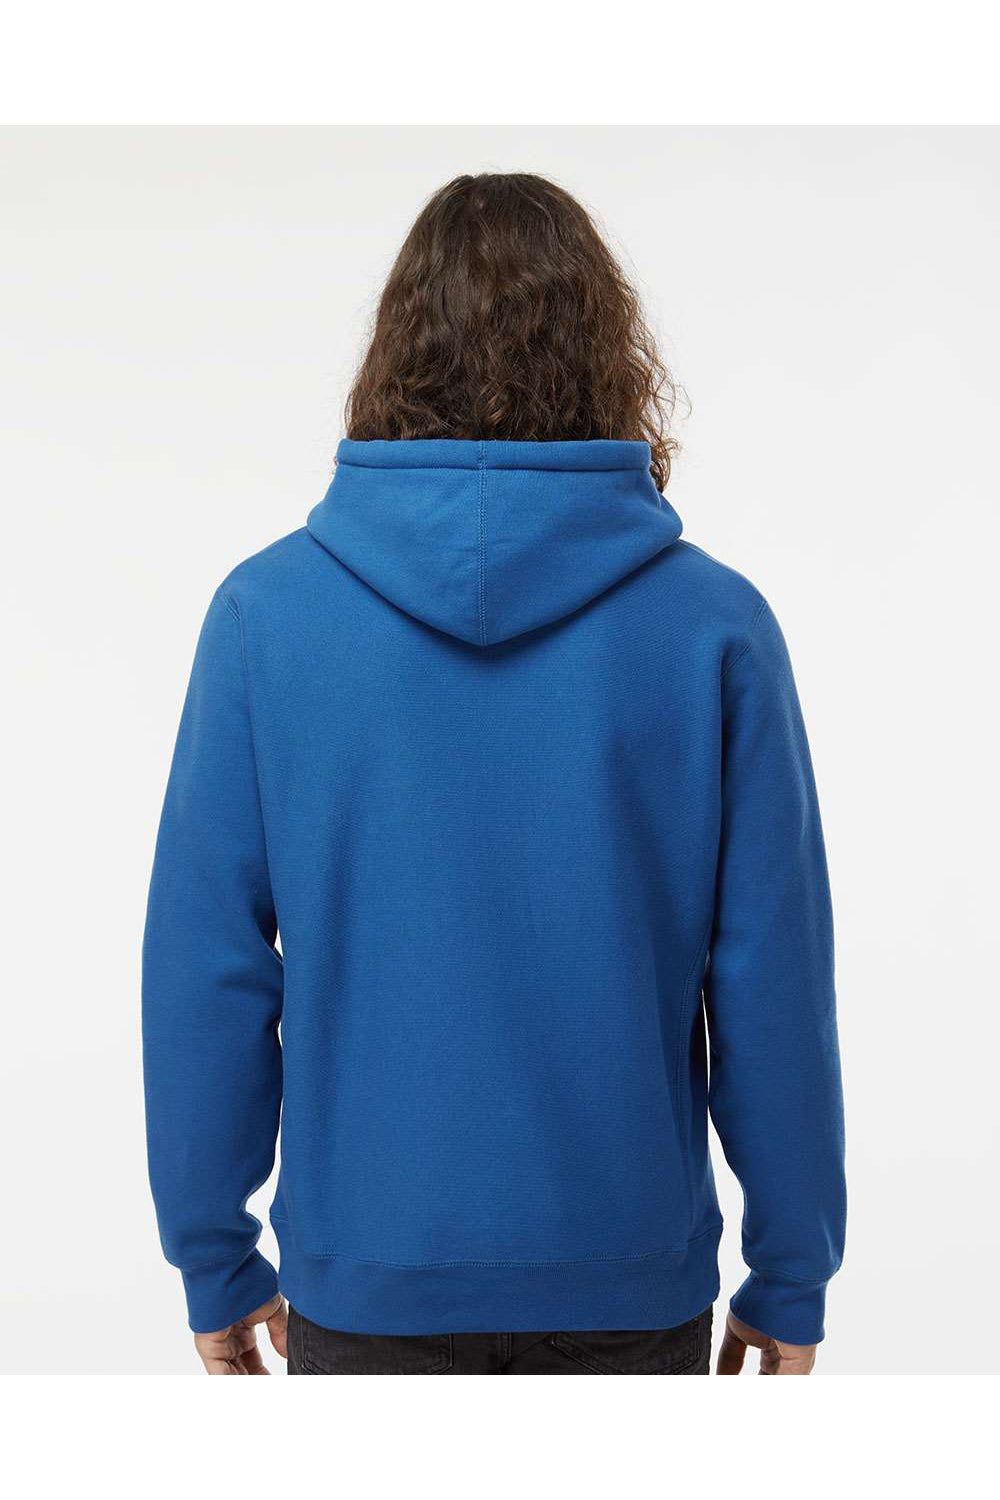 Independent Trading Co. IND5000P Mens Legend Hooded Sweatshirt Hoodie Royal Blue Model Back